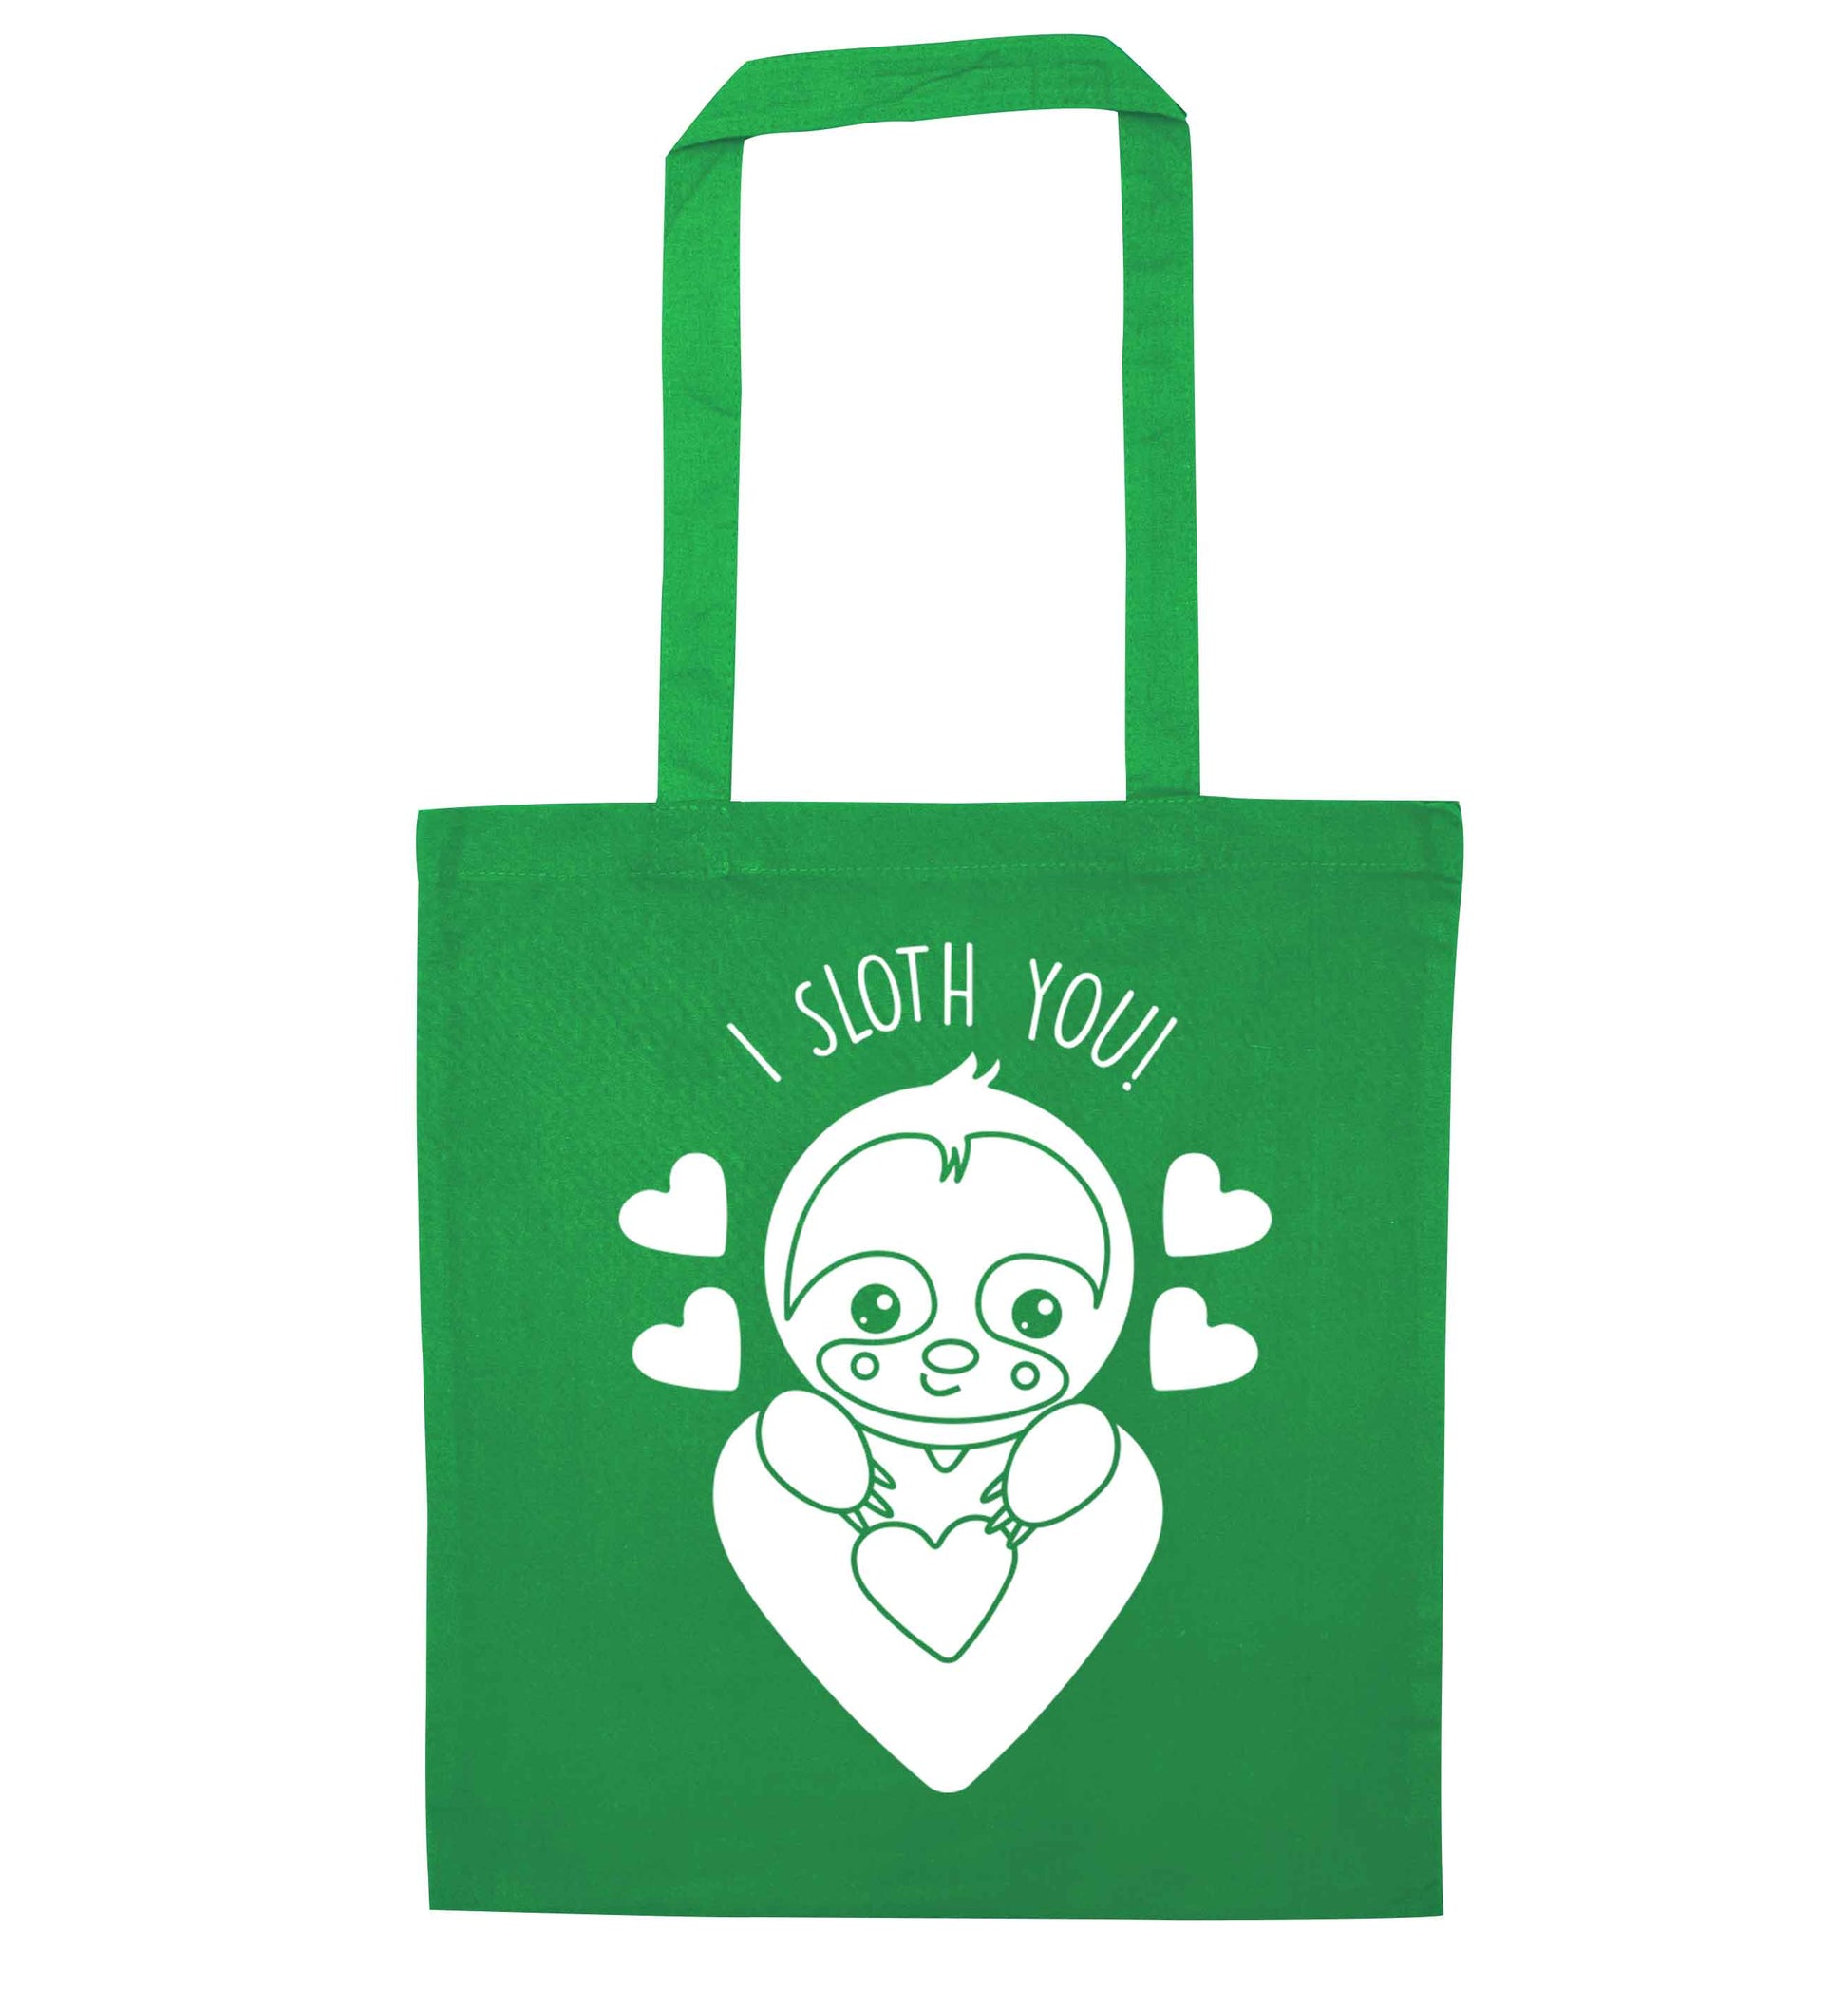 I sloth you green tote bag